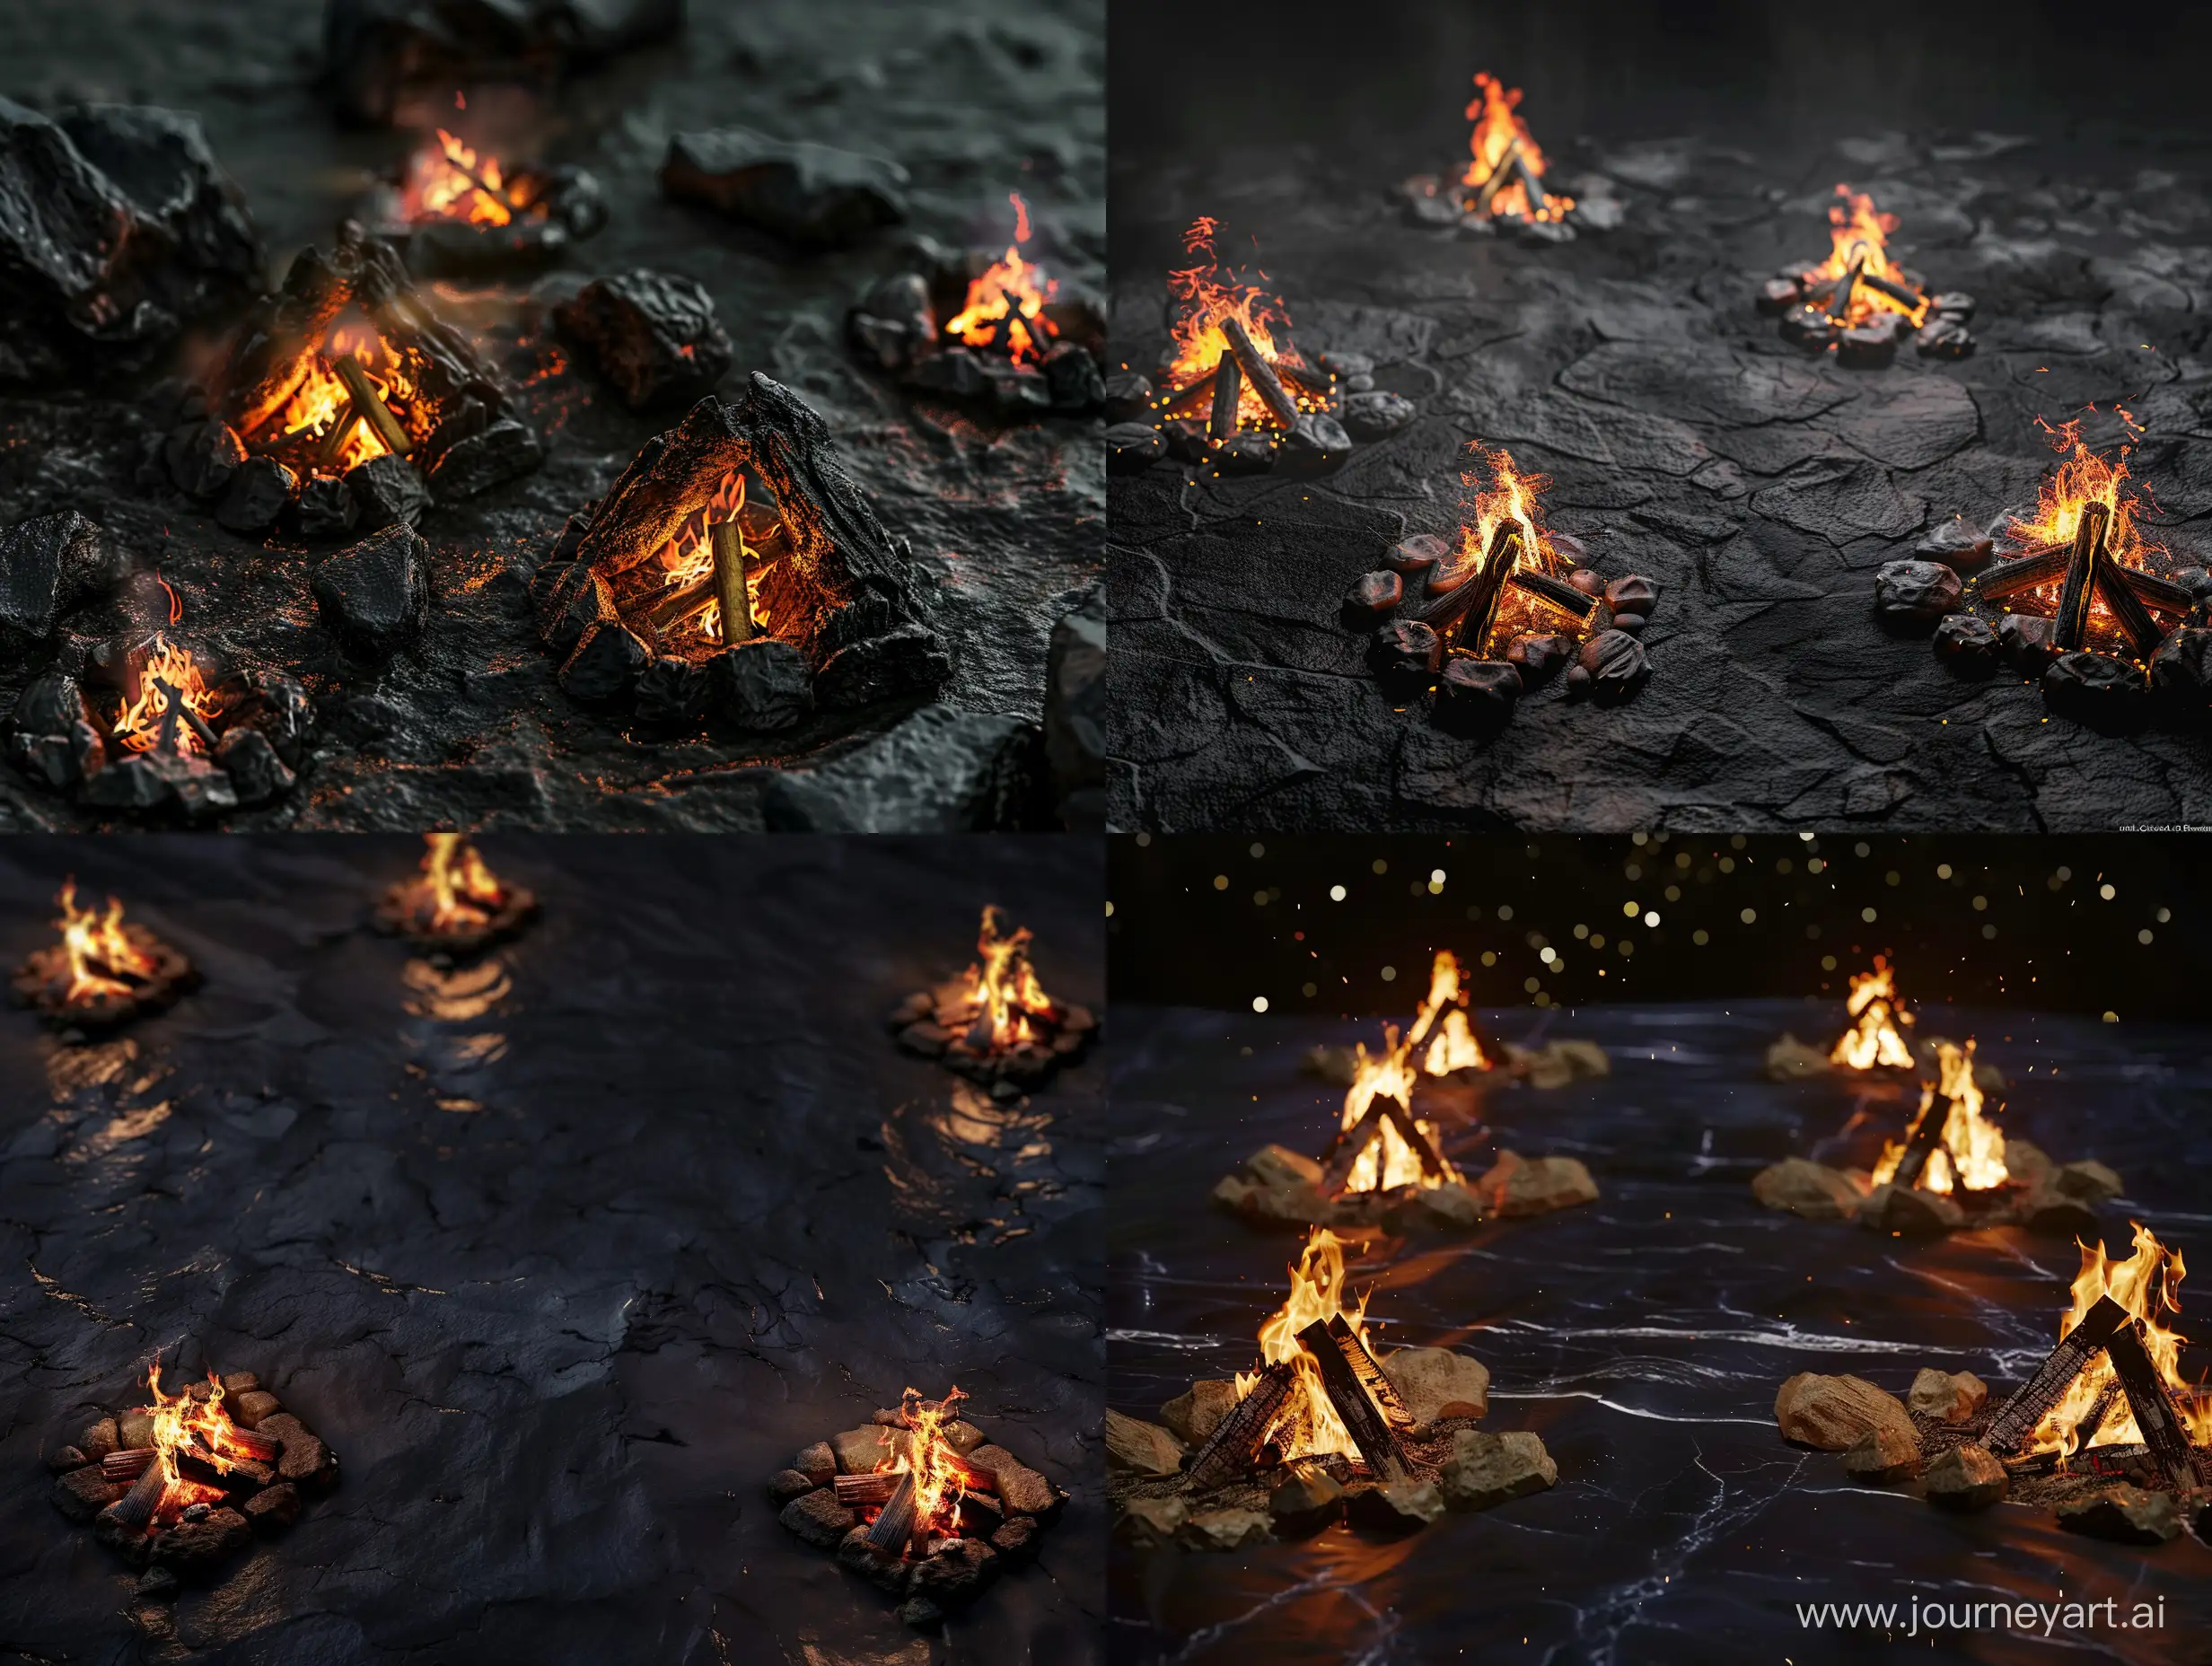 Multiple-Campfires-Illuminating-Night-Sky-on-Black-Background